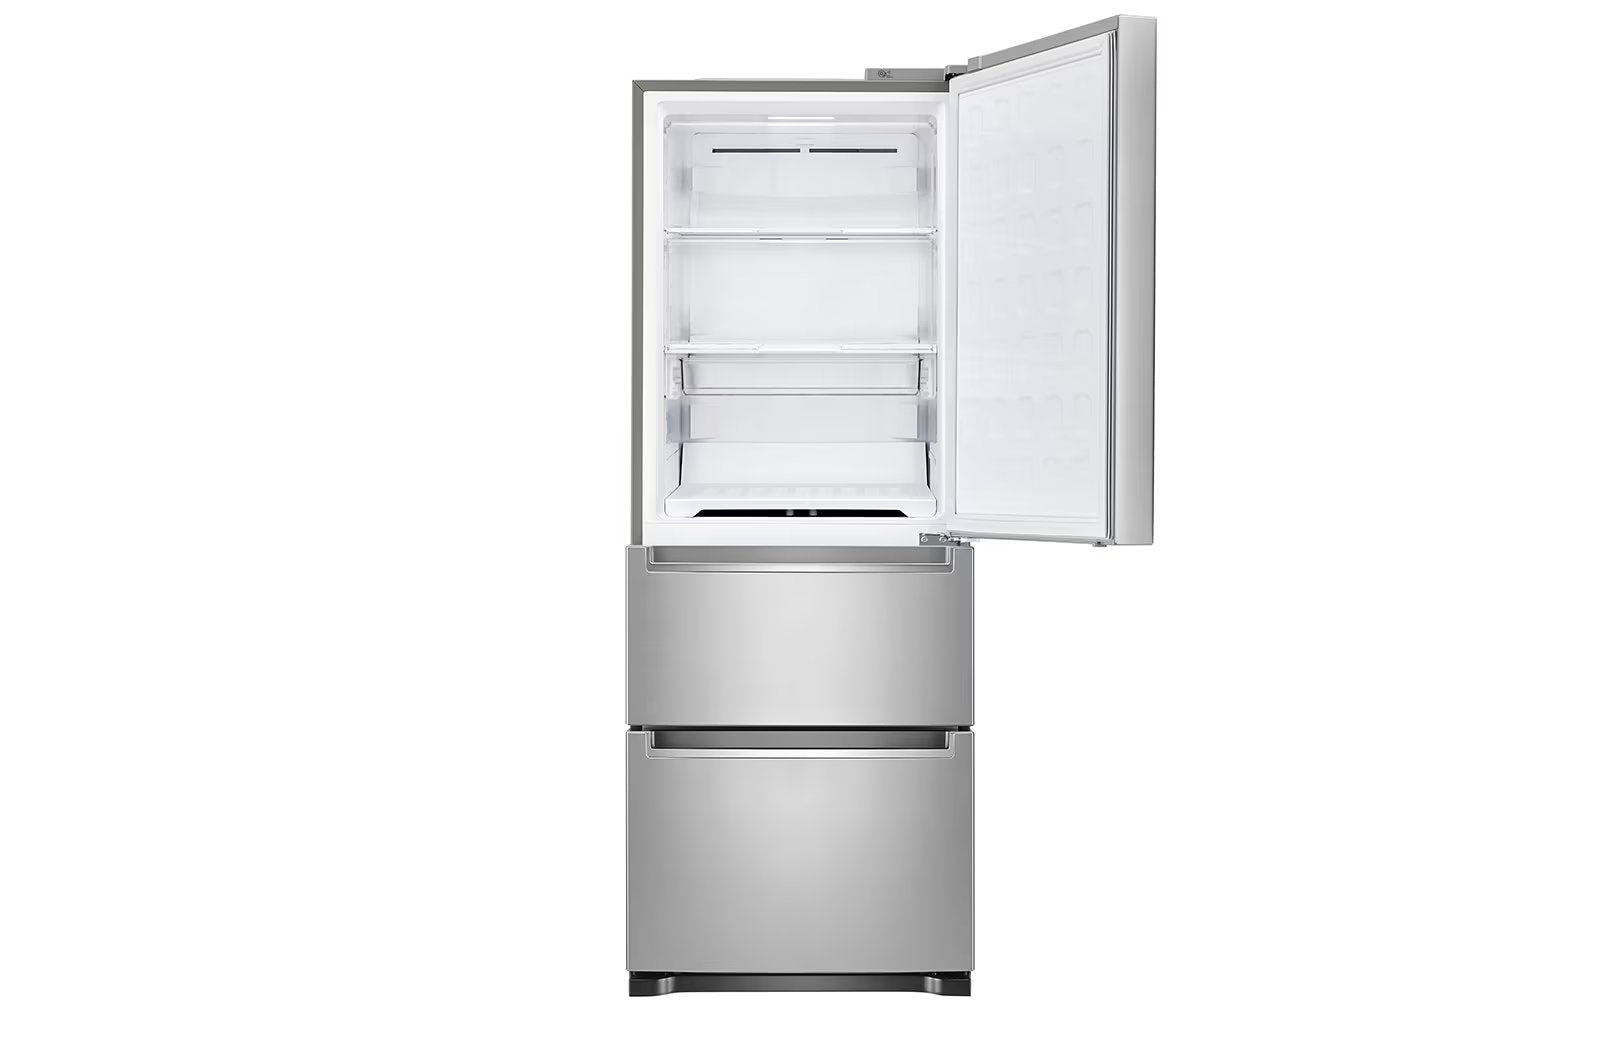 LG - 26.25 Inch 11.7 cu. ft Bottom Mount Refrigerator in Silver - LRKNS1205V